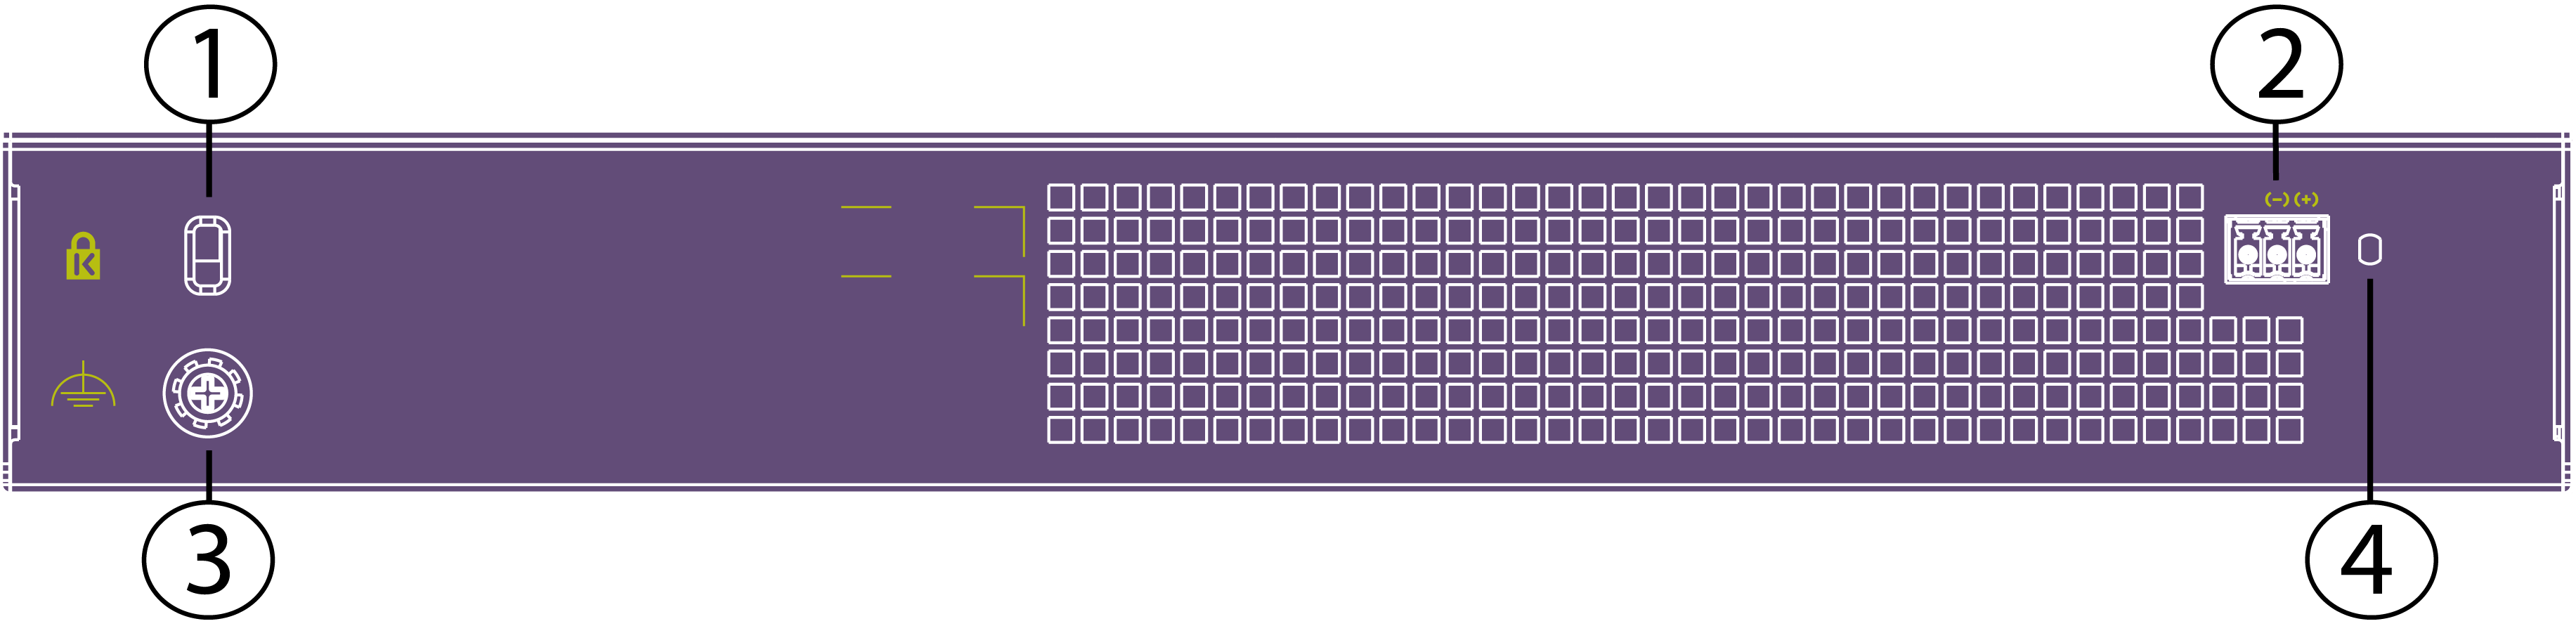 5320-16P-4WX-DC Rear Panel